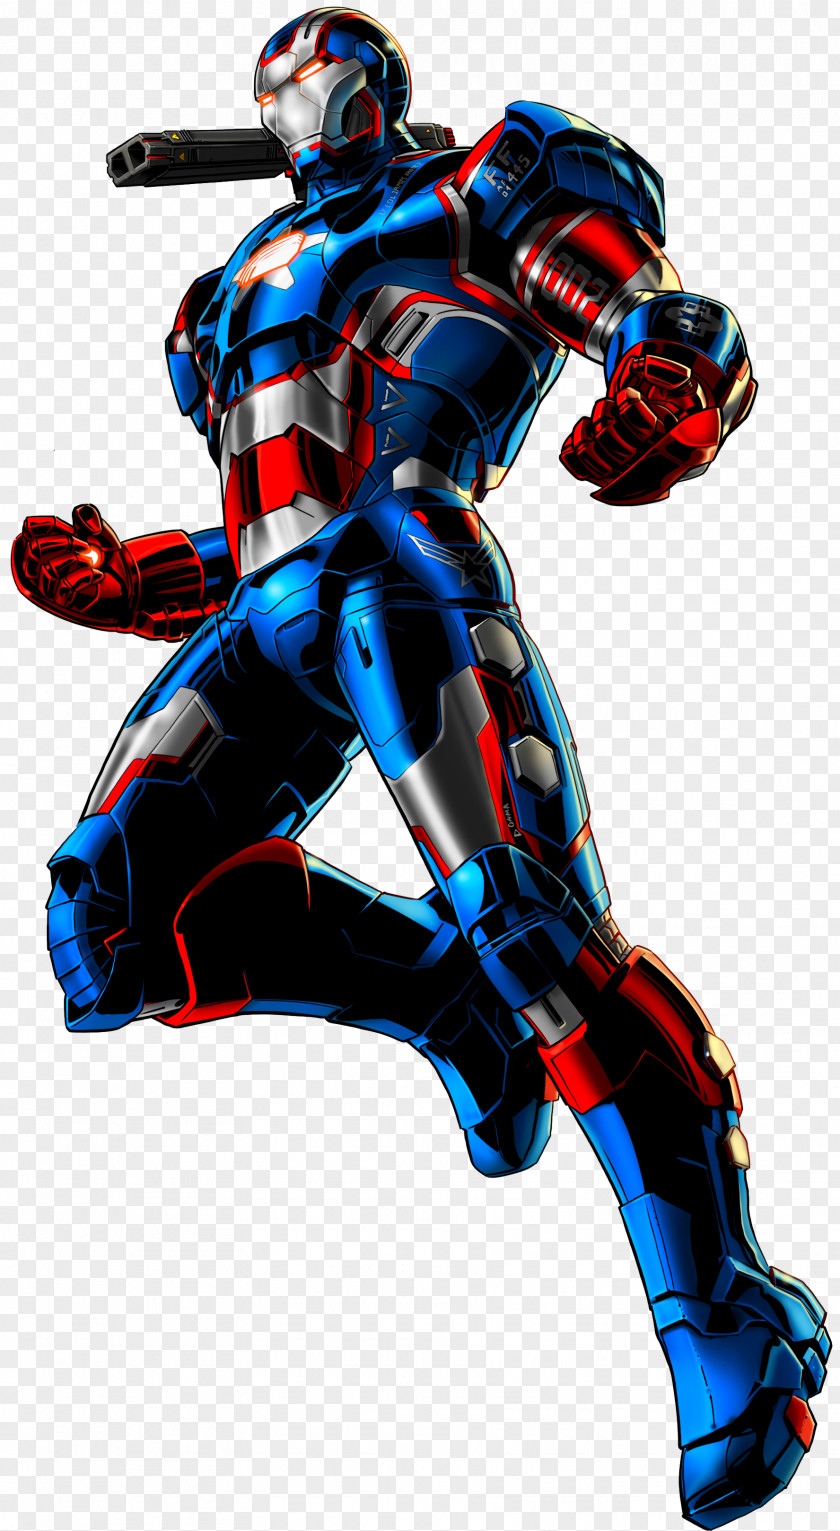 Iron Man War Machine Marvel: Avengers Alliance Black Widow Spider-Man PNG